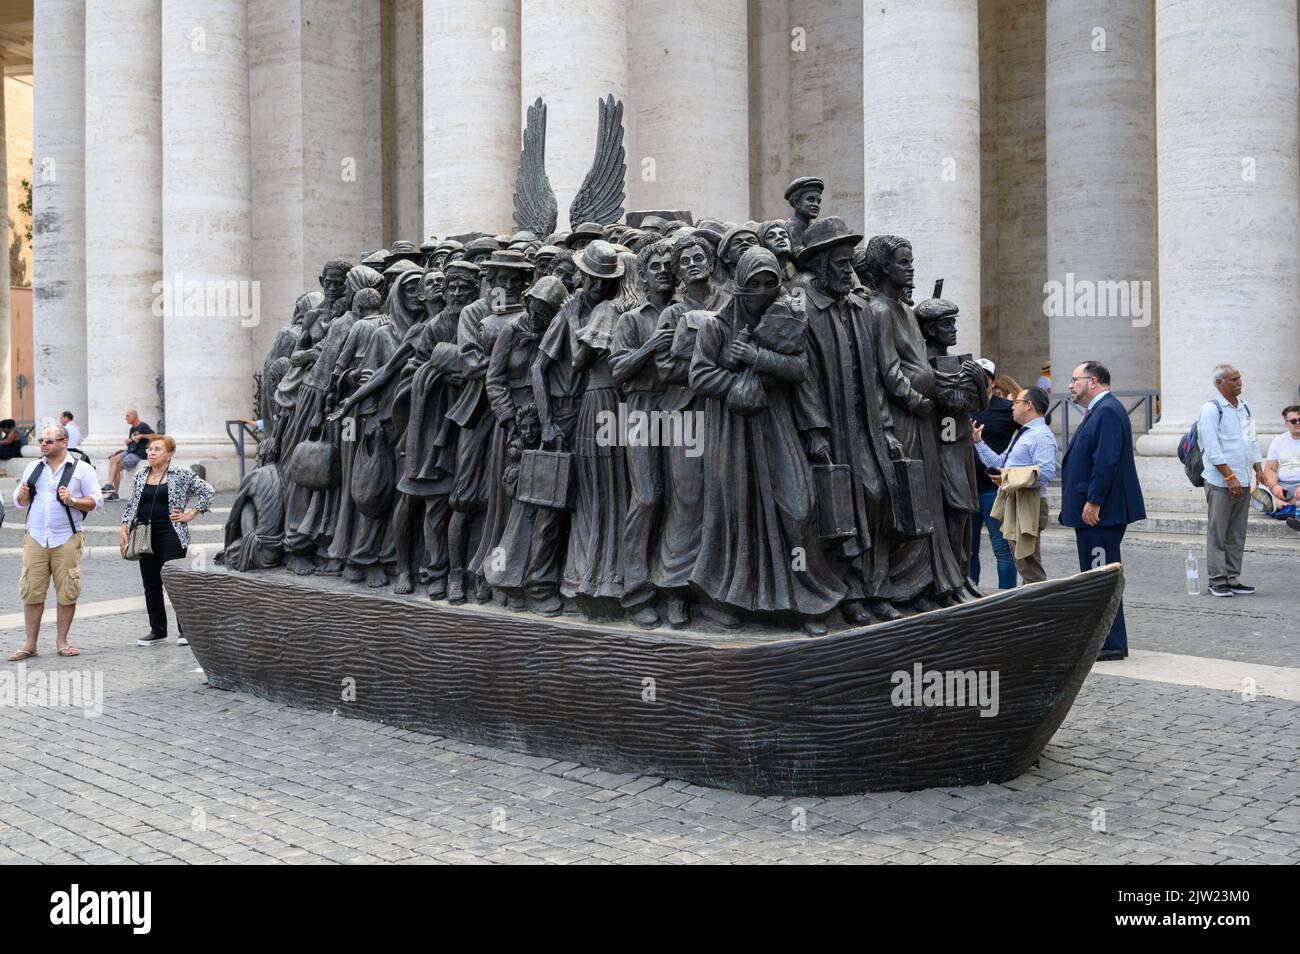 La scultura “Angels unawares” dell’artista canadese Timothy P. Schmalz in Piazza San Pietro in Vaticano. Foto Stock